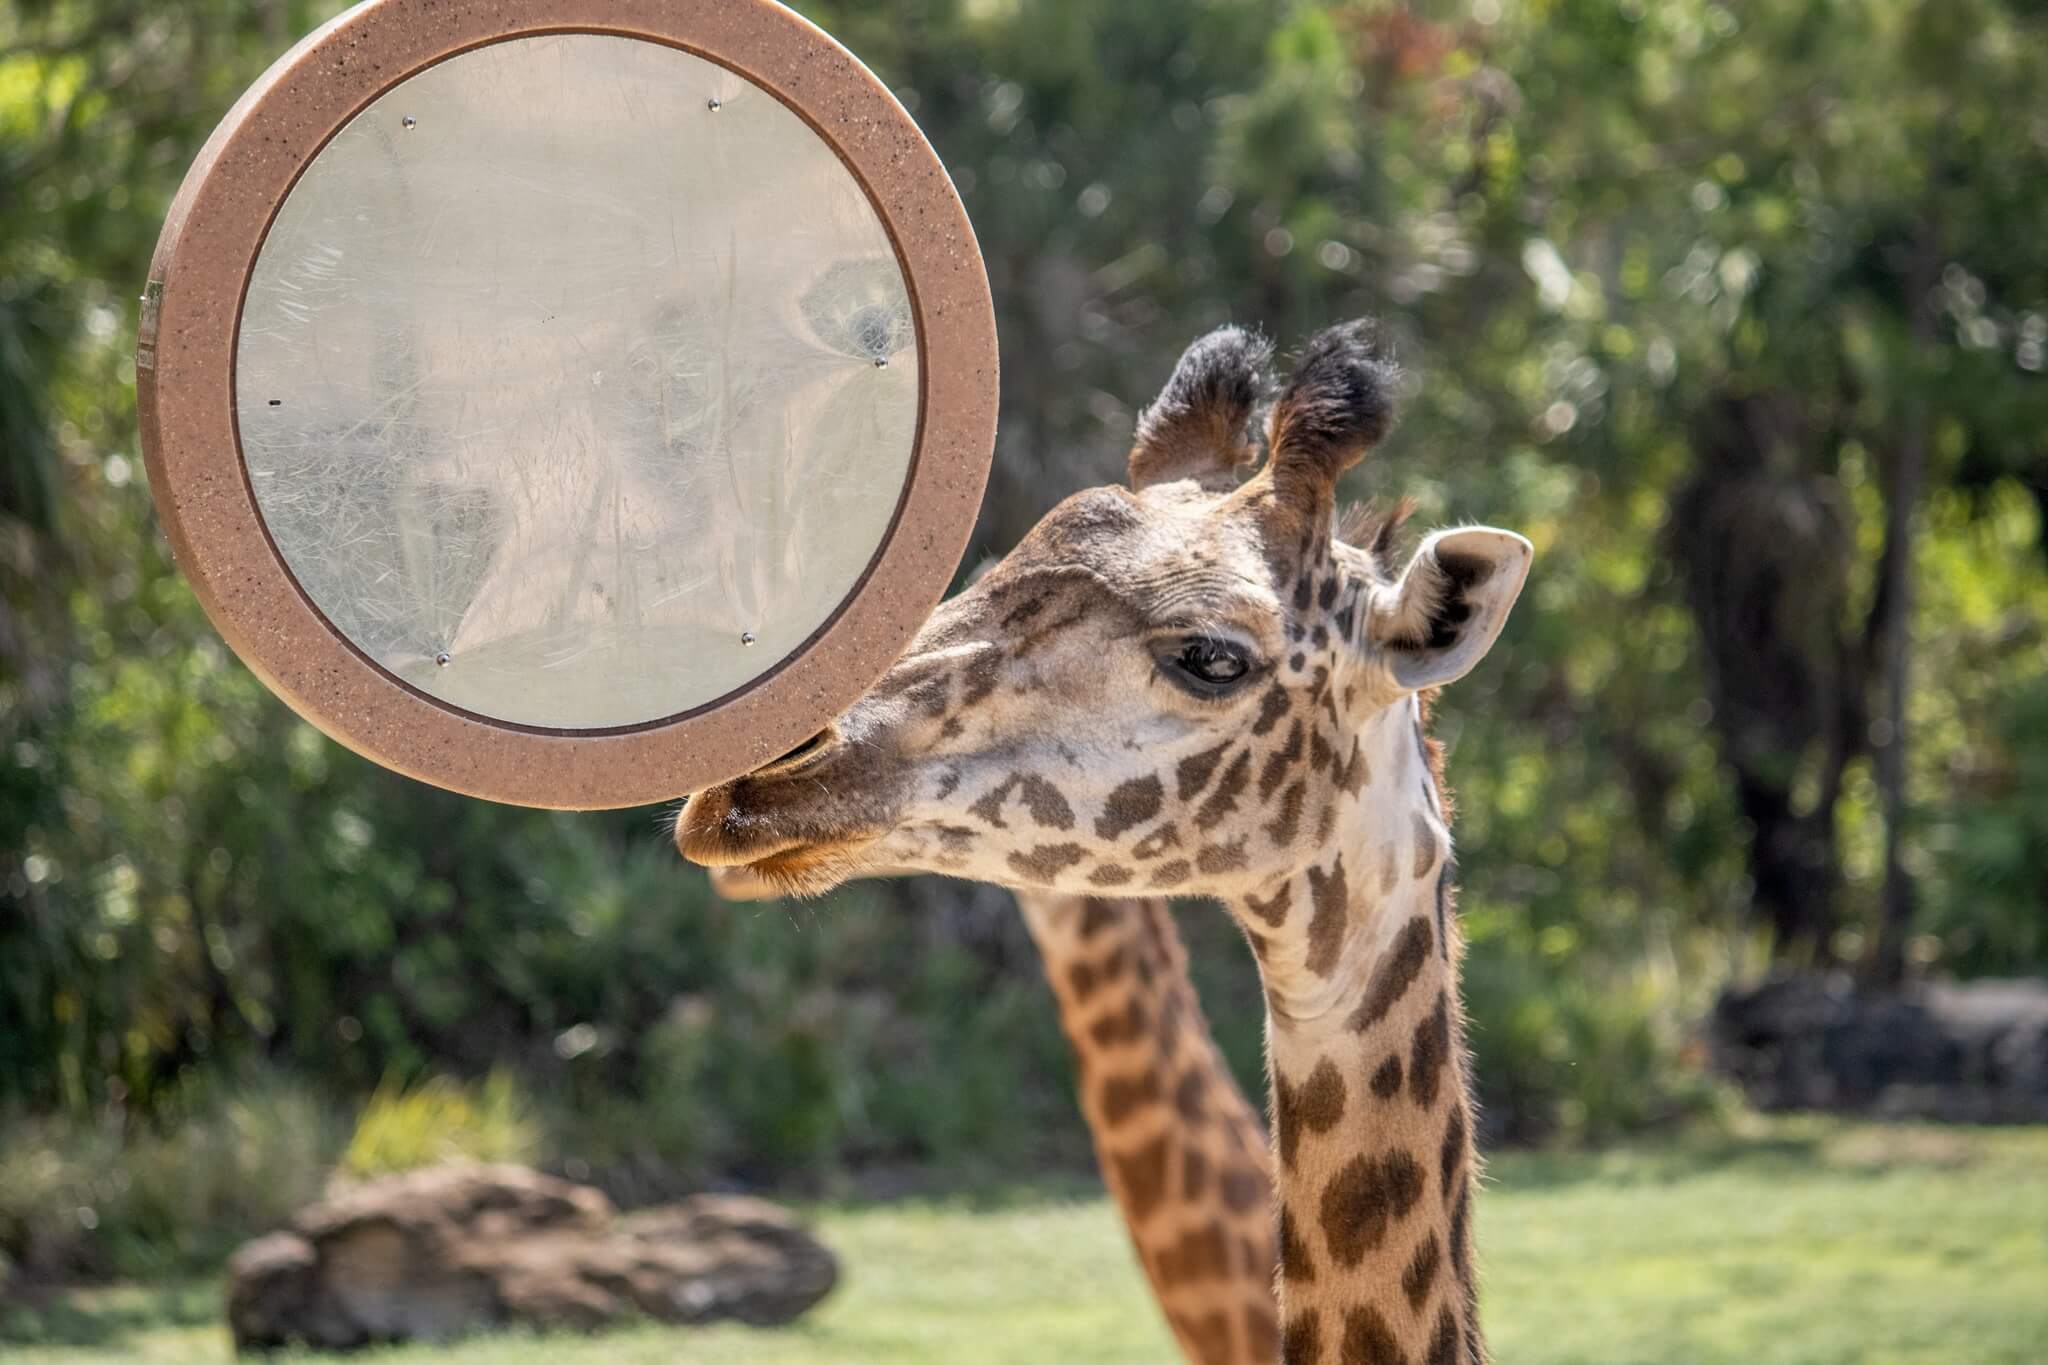 Giraffe at Brevard Zoo